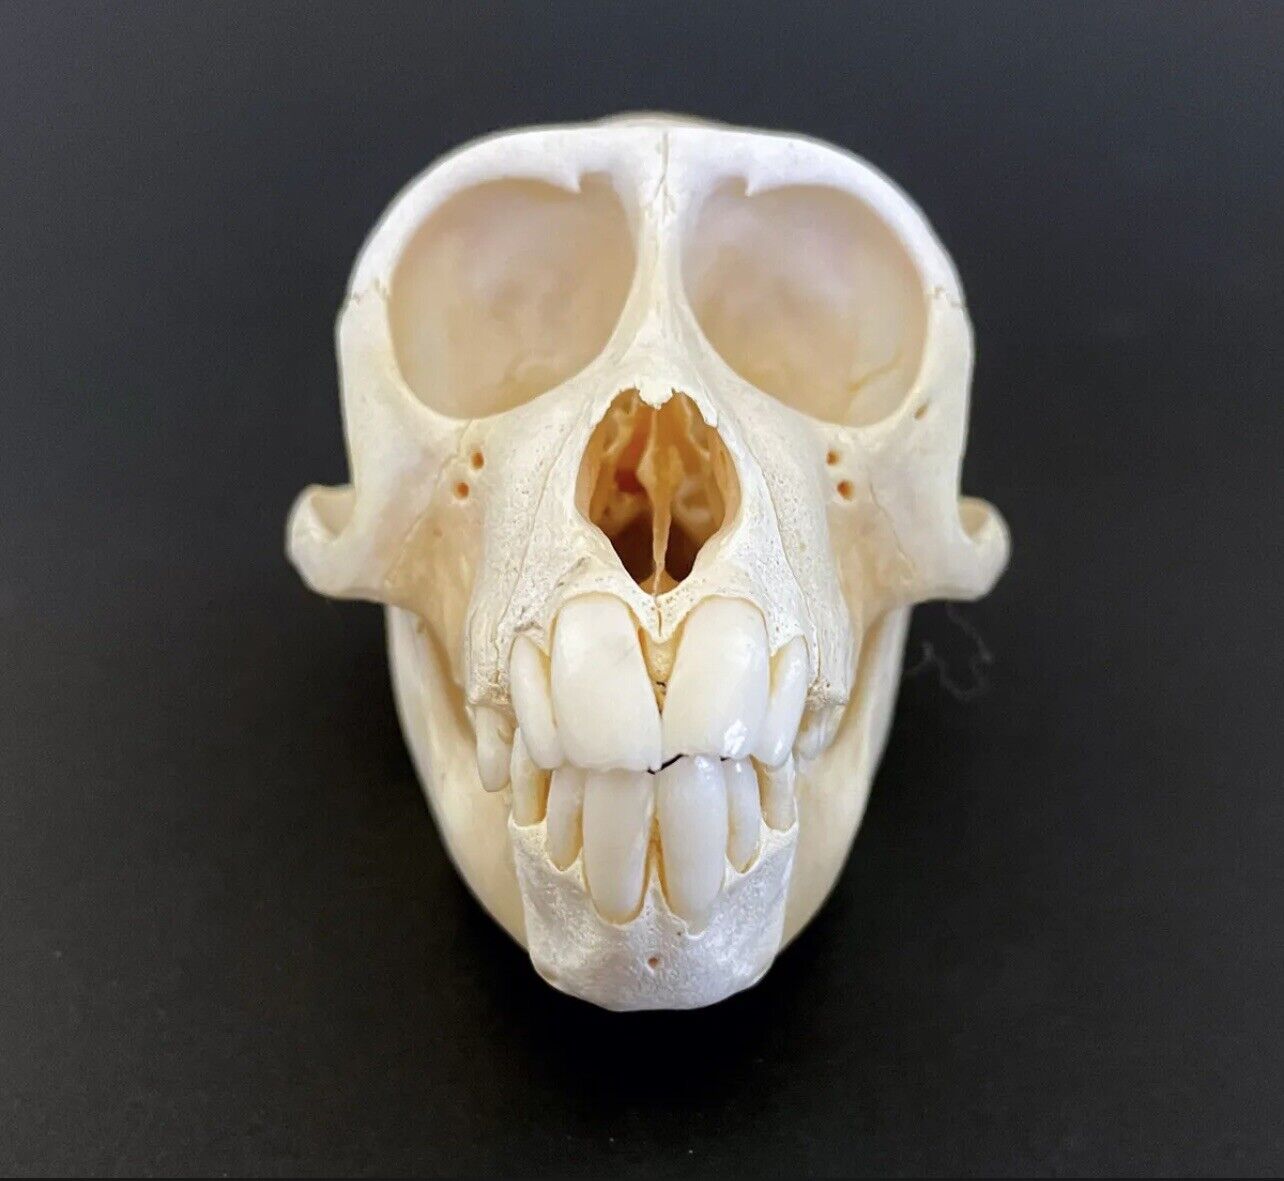 Rhesus macaque monkey skull